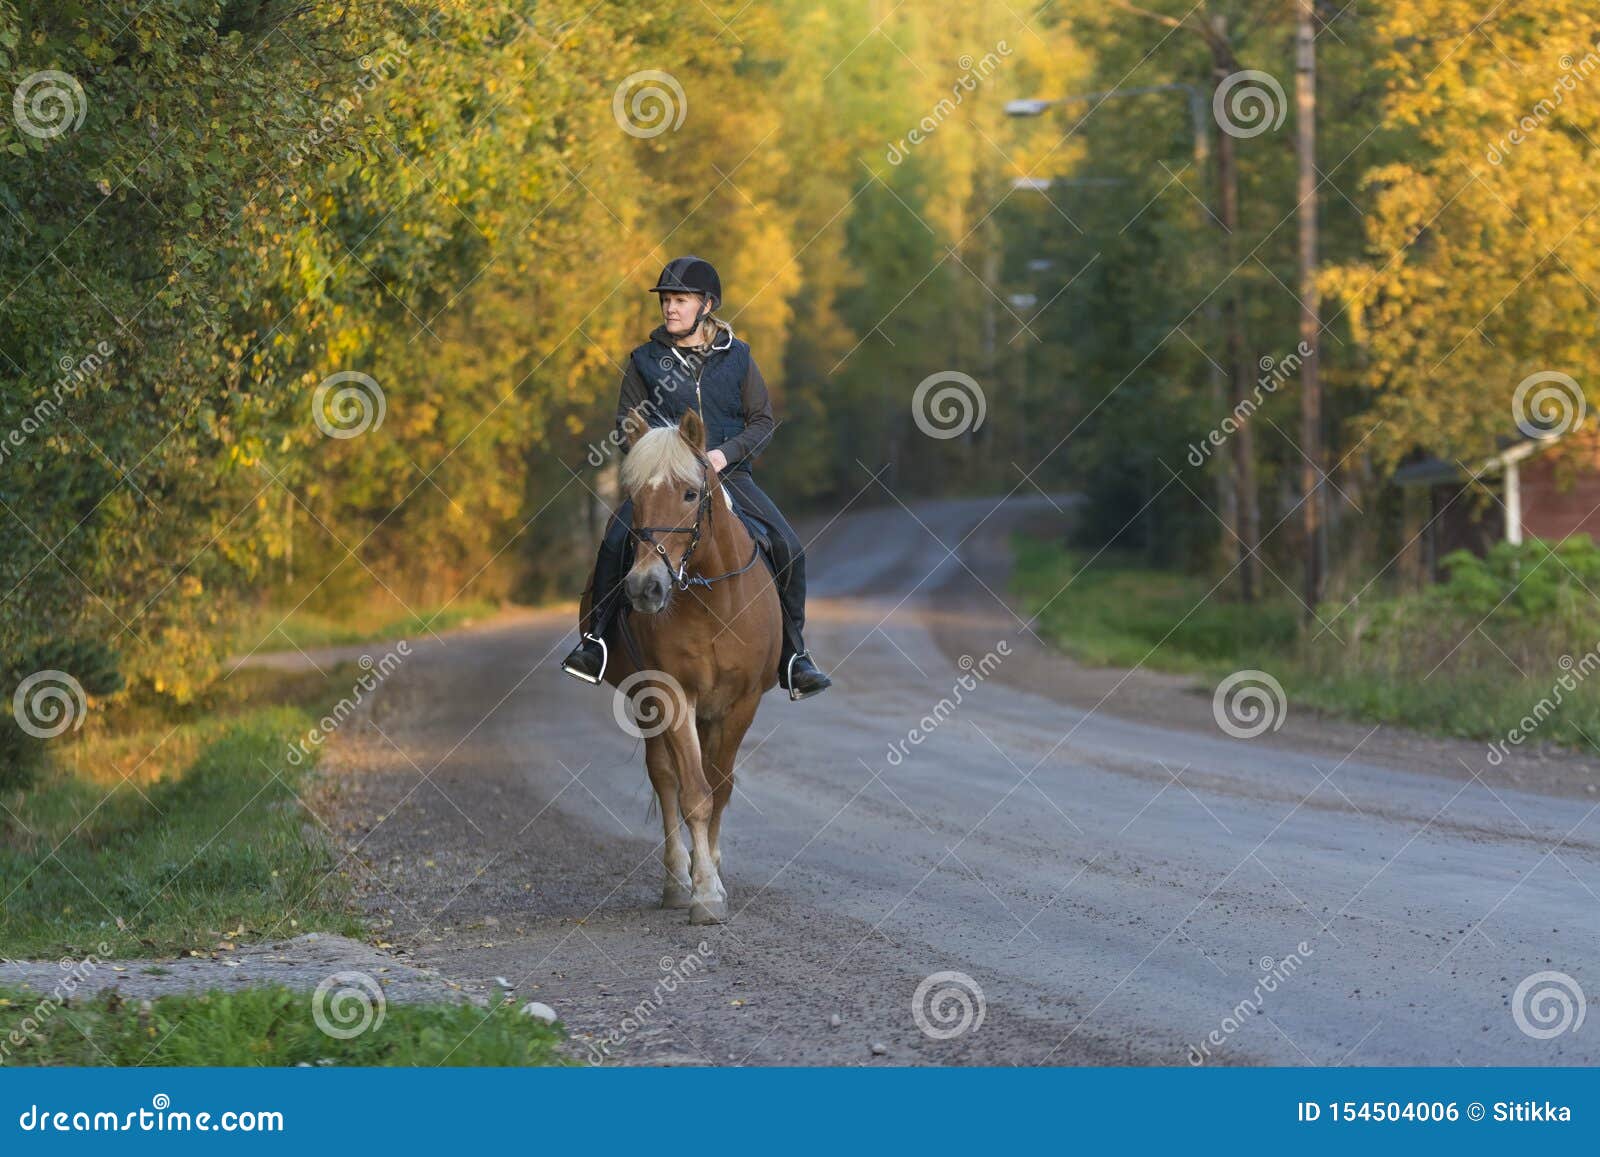 woman horseback riding in sunset